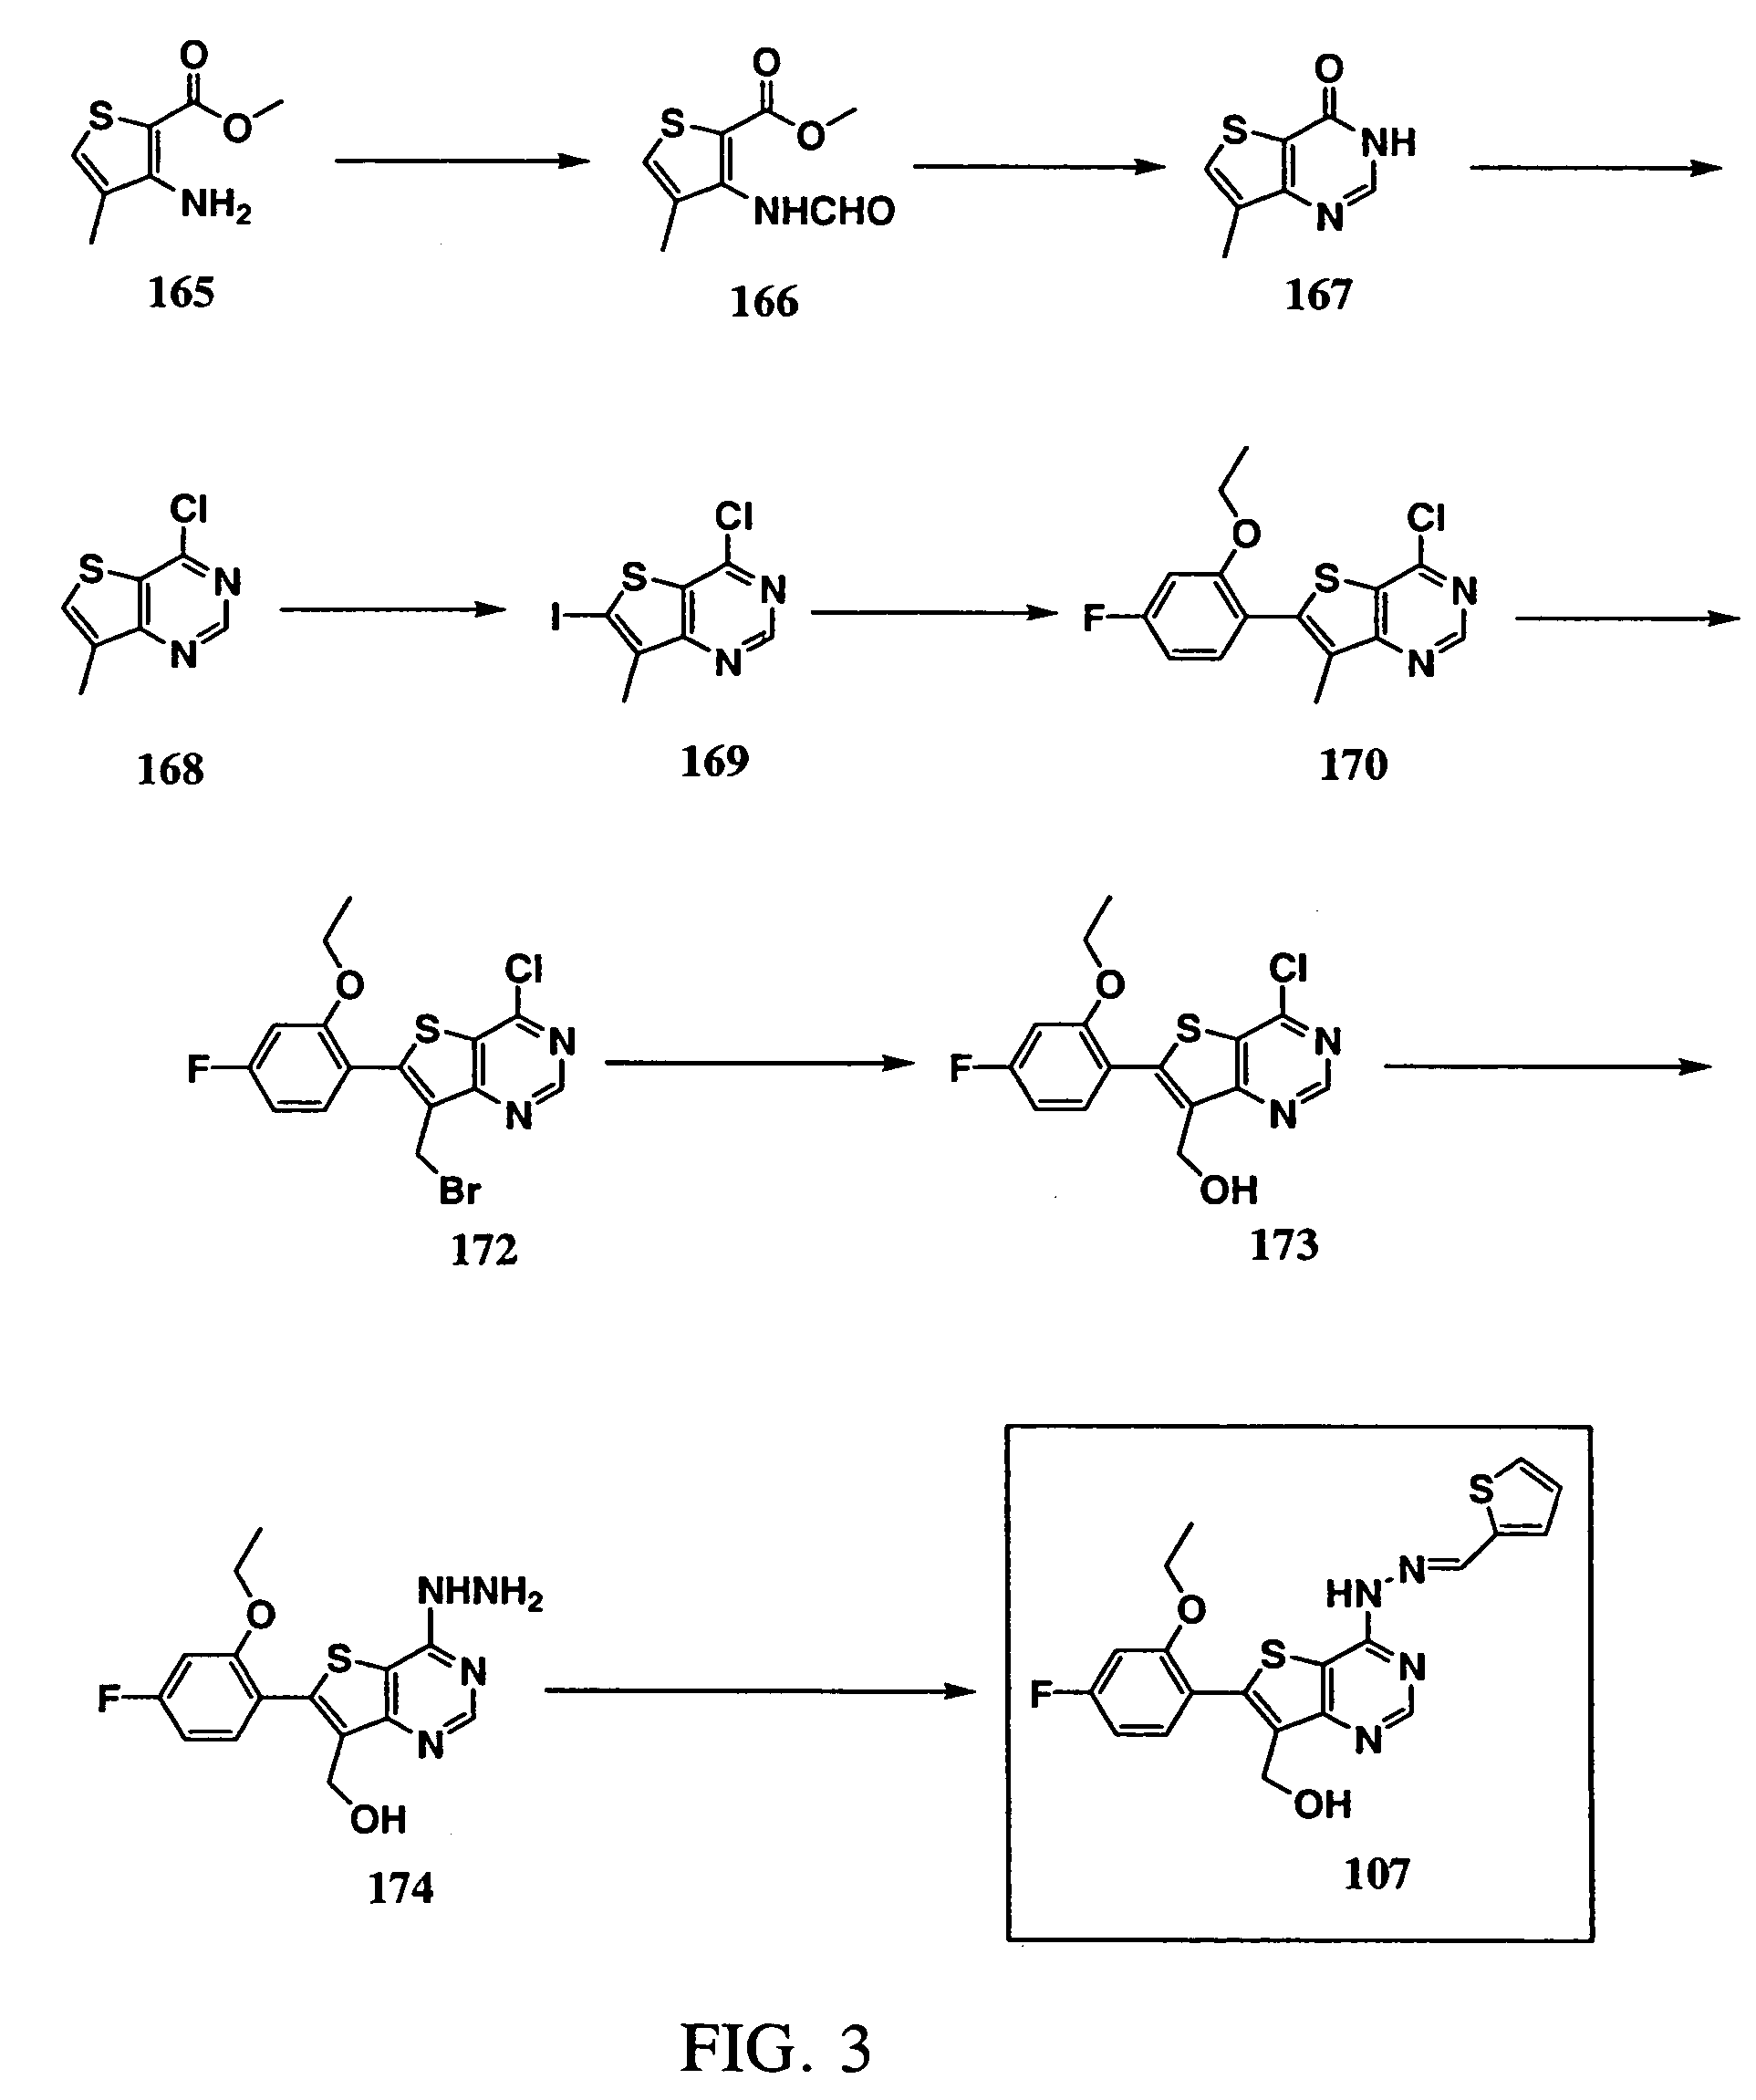 Small molecule thienopyrimidine-based protein tyrosine kinase inhibitors